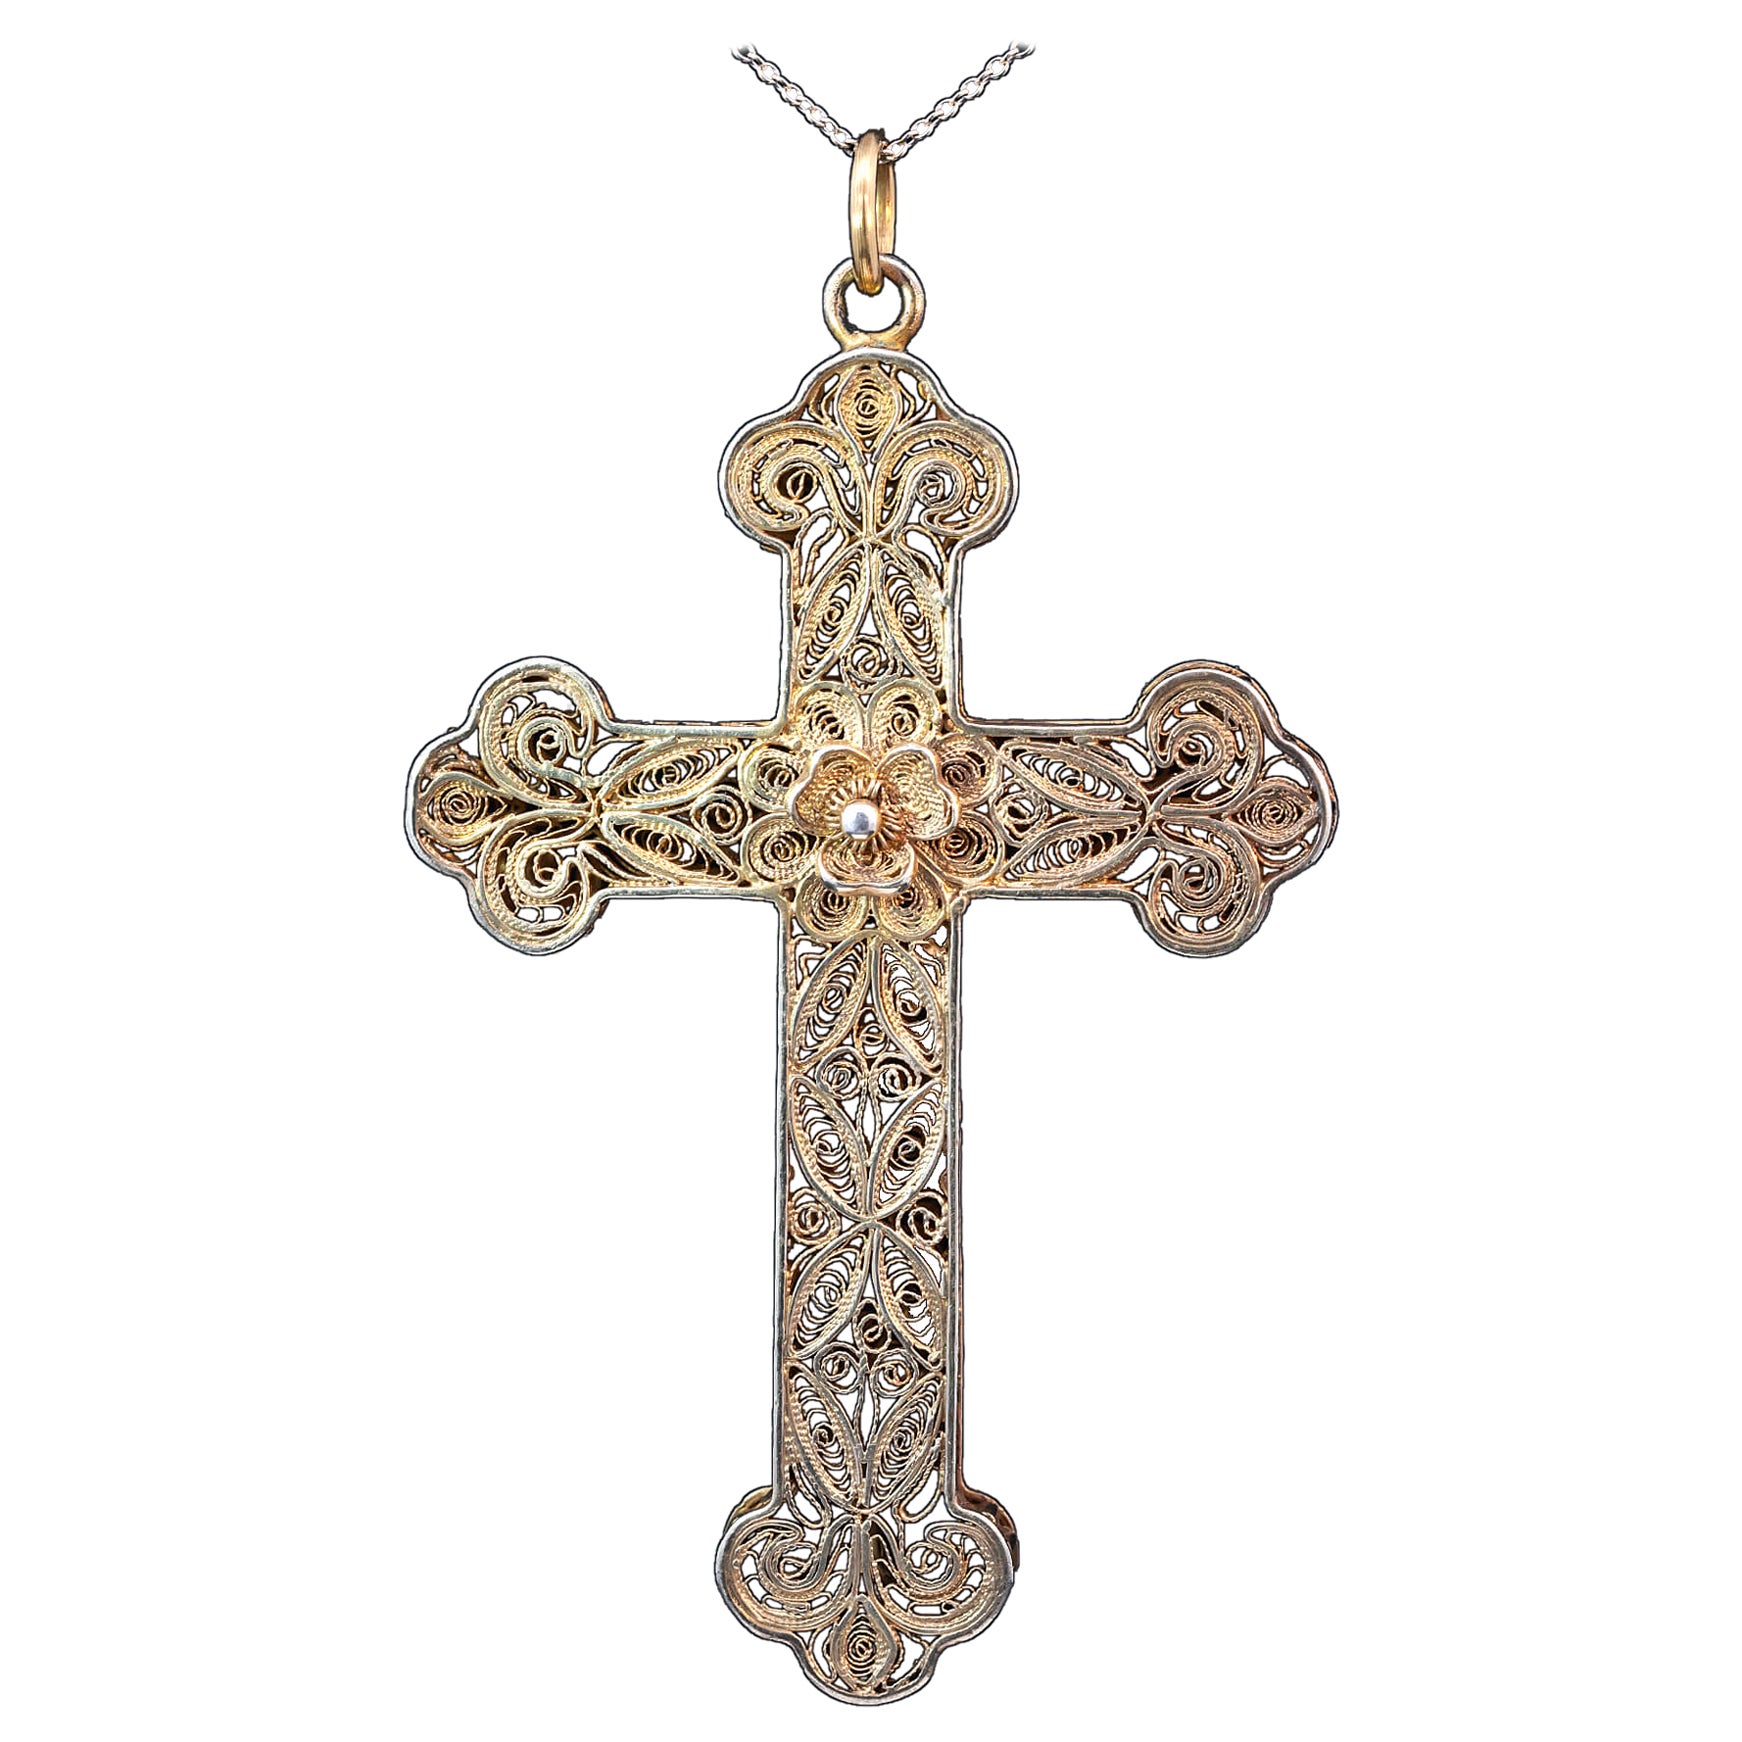 Victorian Ornate Cannetille Silver Gilt Cross Circa 1850